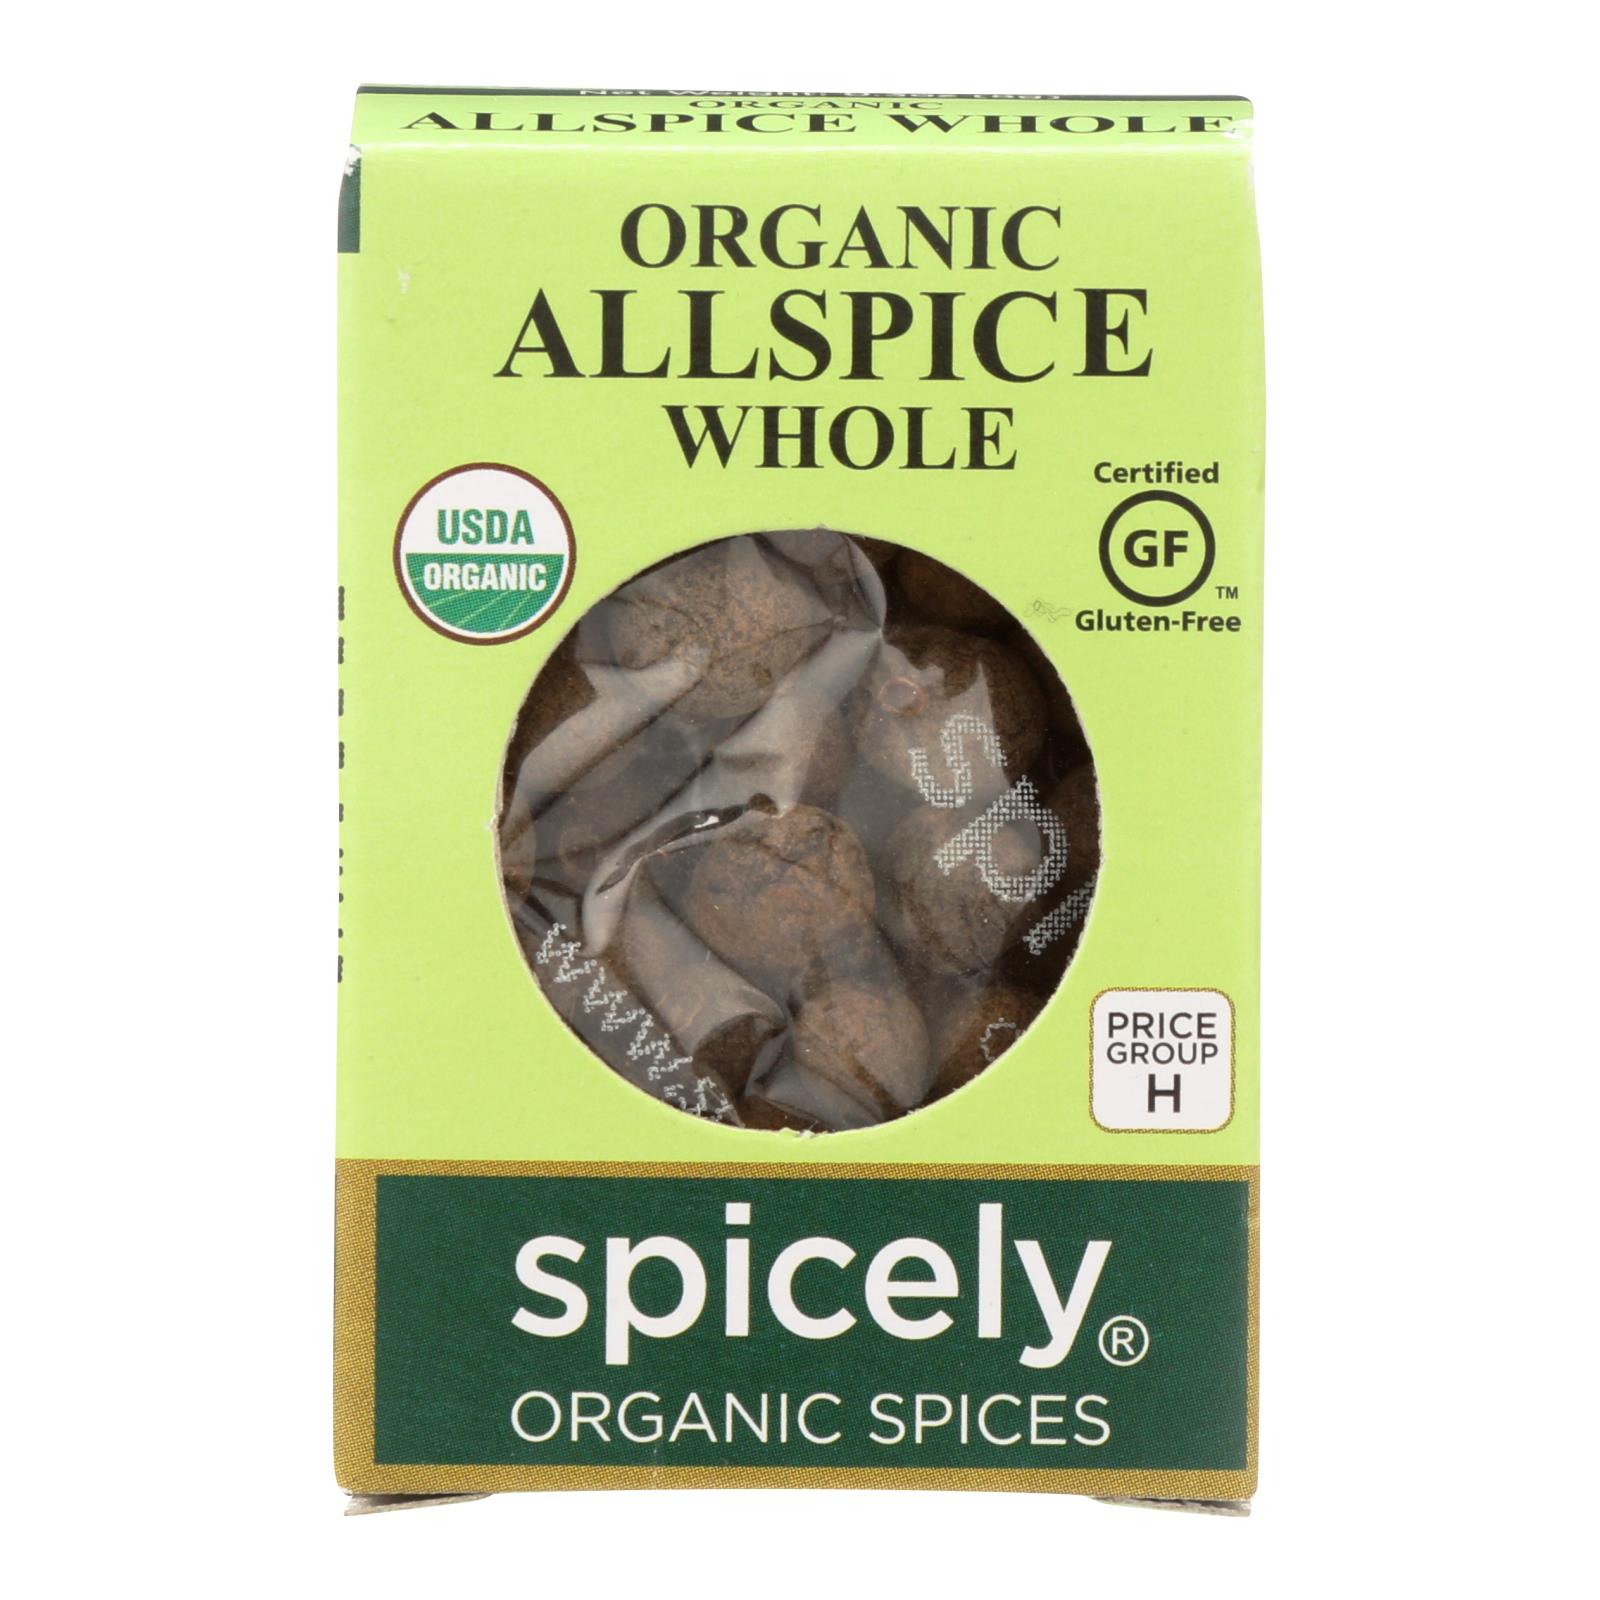 Spicely Organics - Organic Allspice - Whole - 6개 묶음상품 - 0.3 oz.